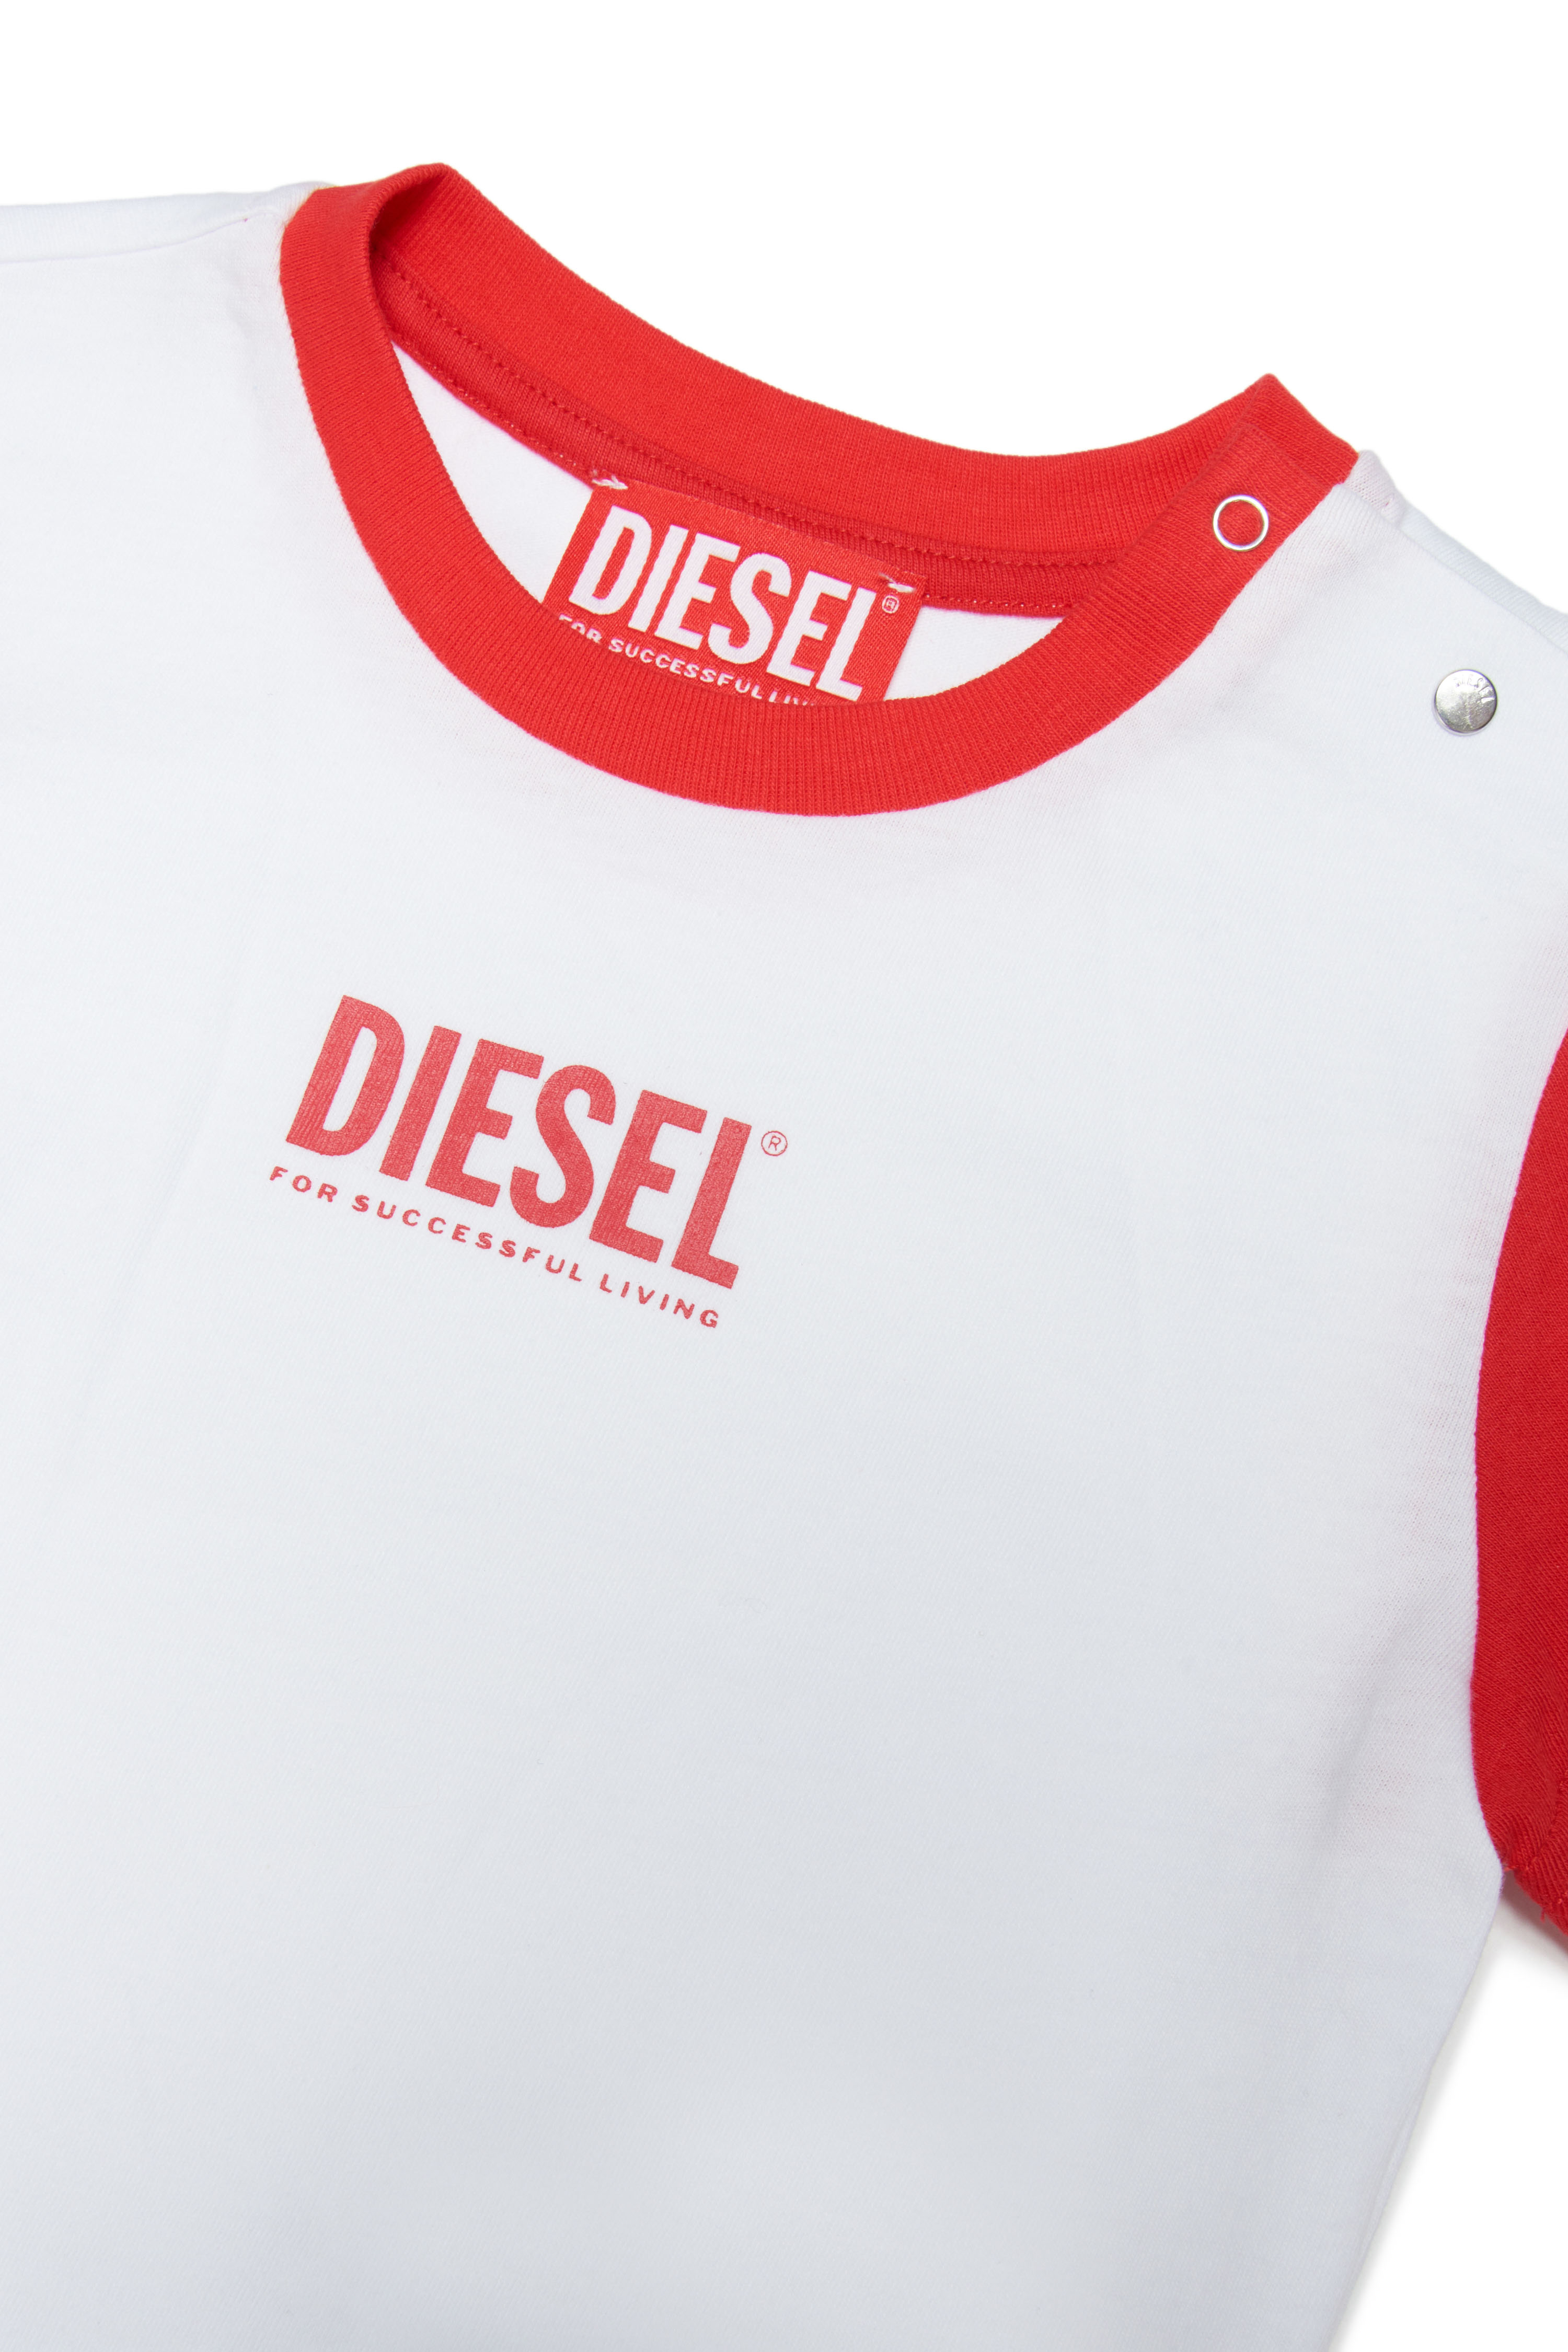 Diesel - MTANTEB, White/Red - Image 3